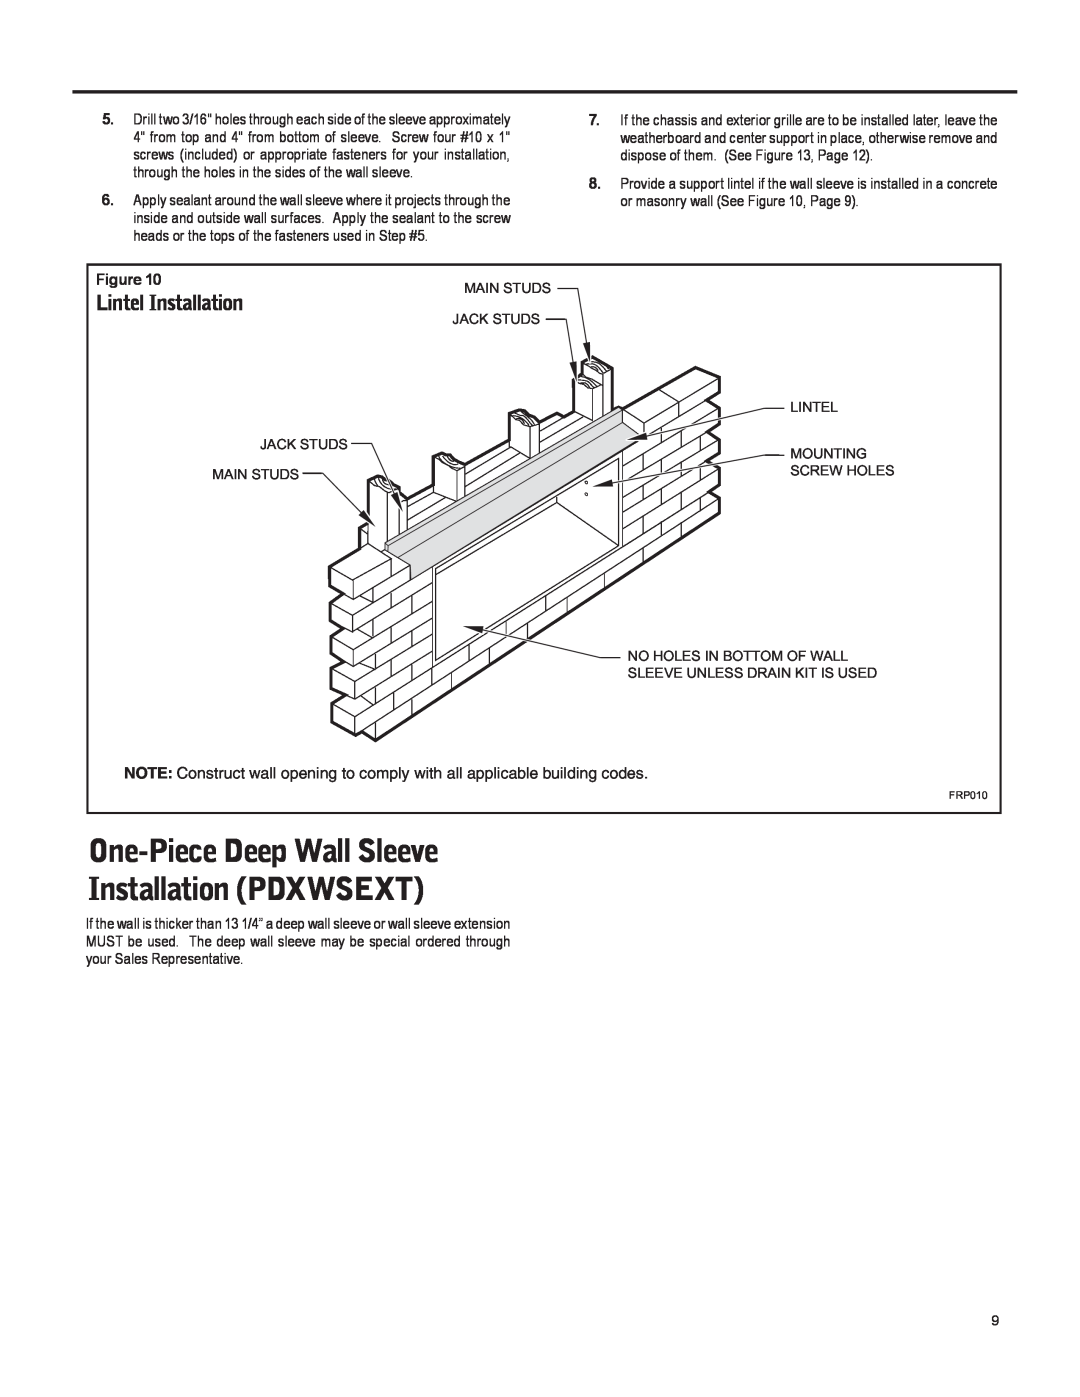 Friedrich 920-087-09 operation manual One-PieceDeep Wall Sleeve Installation PDXWSEXT, Lintel Installation 